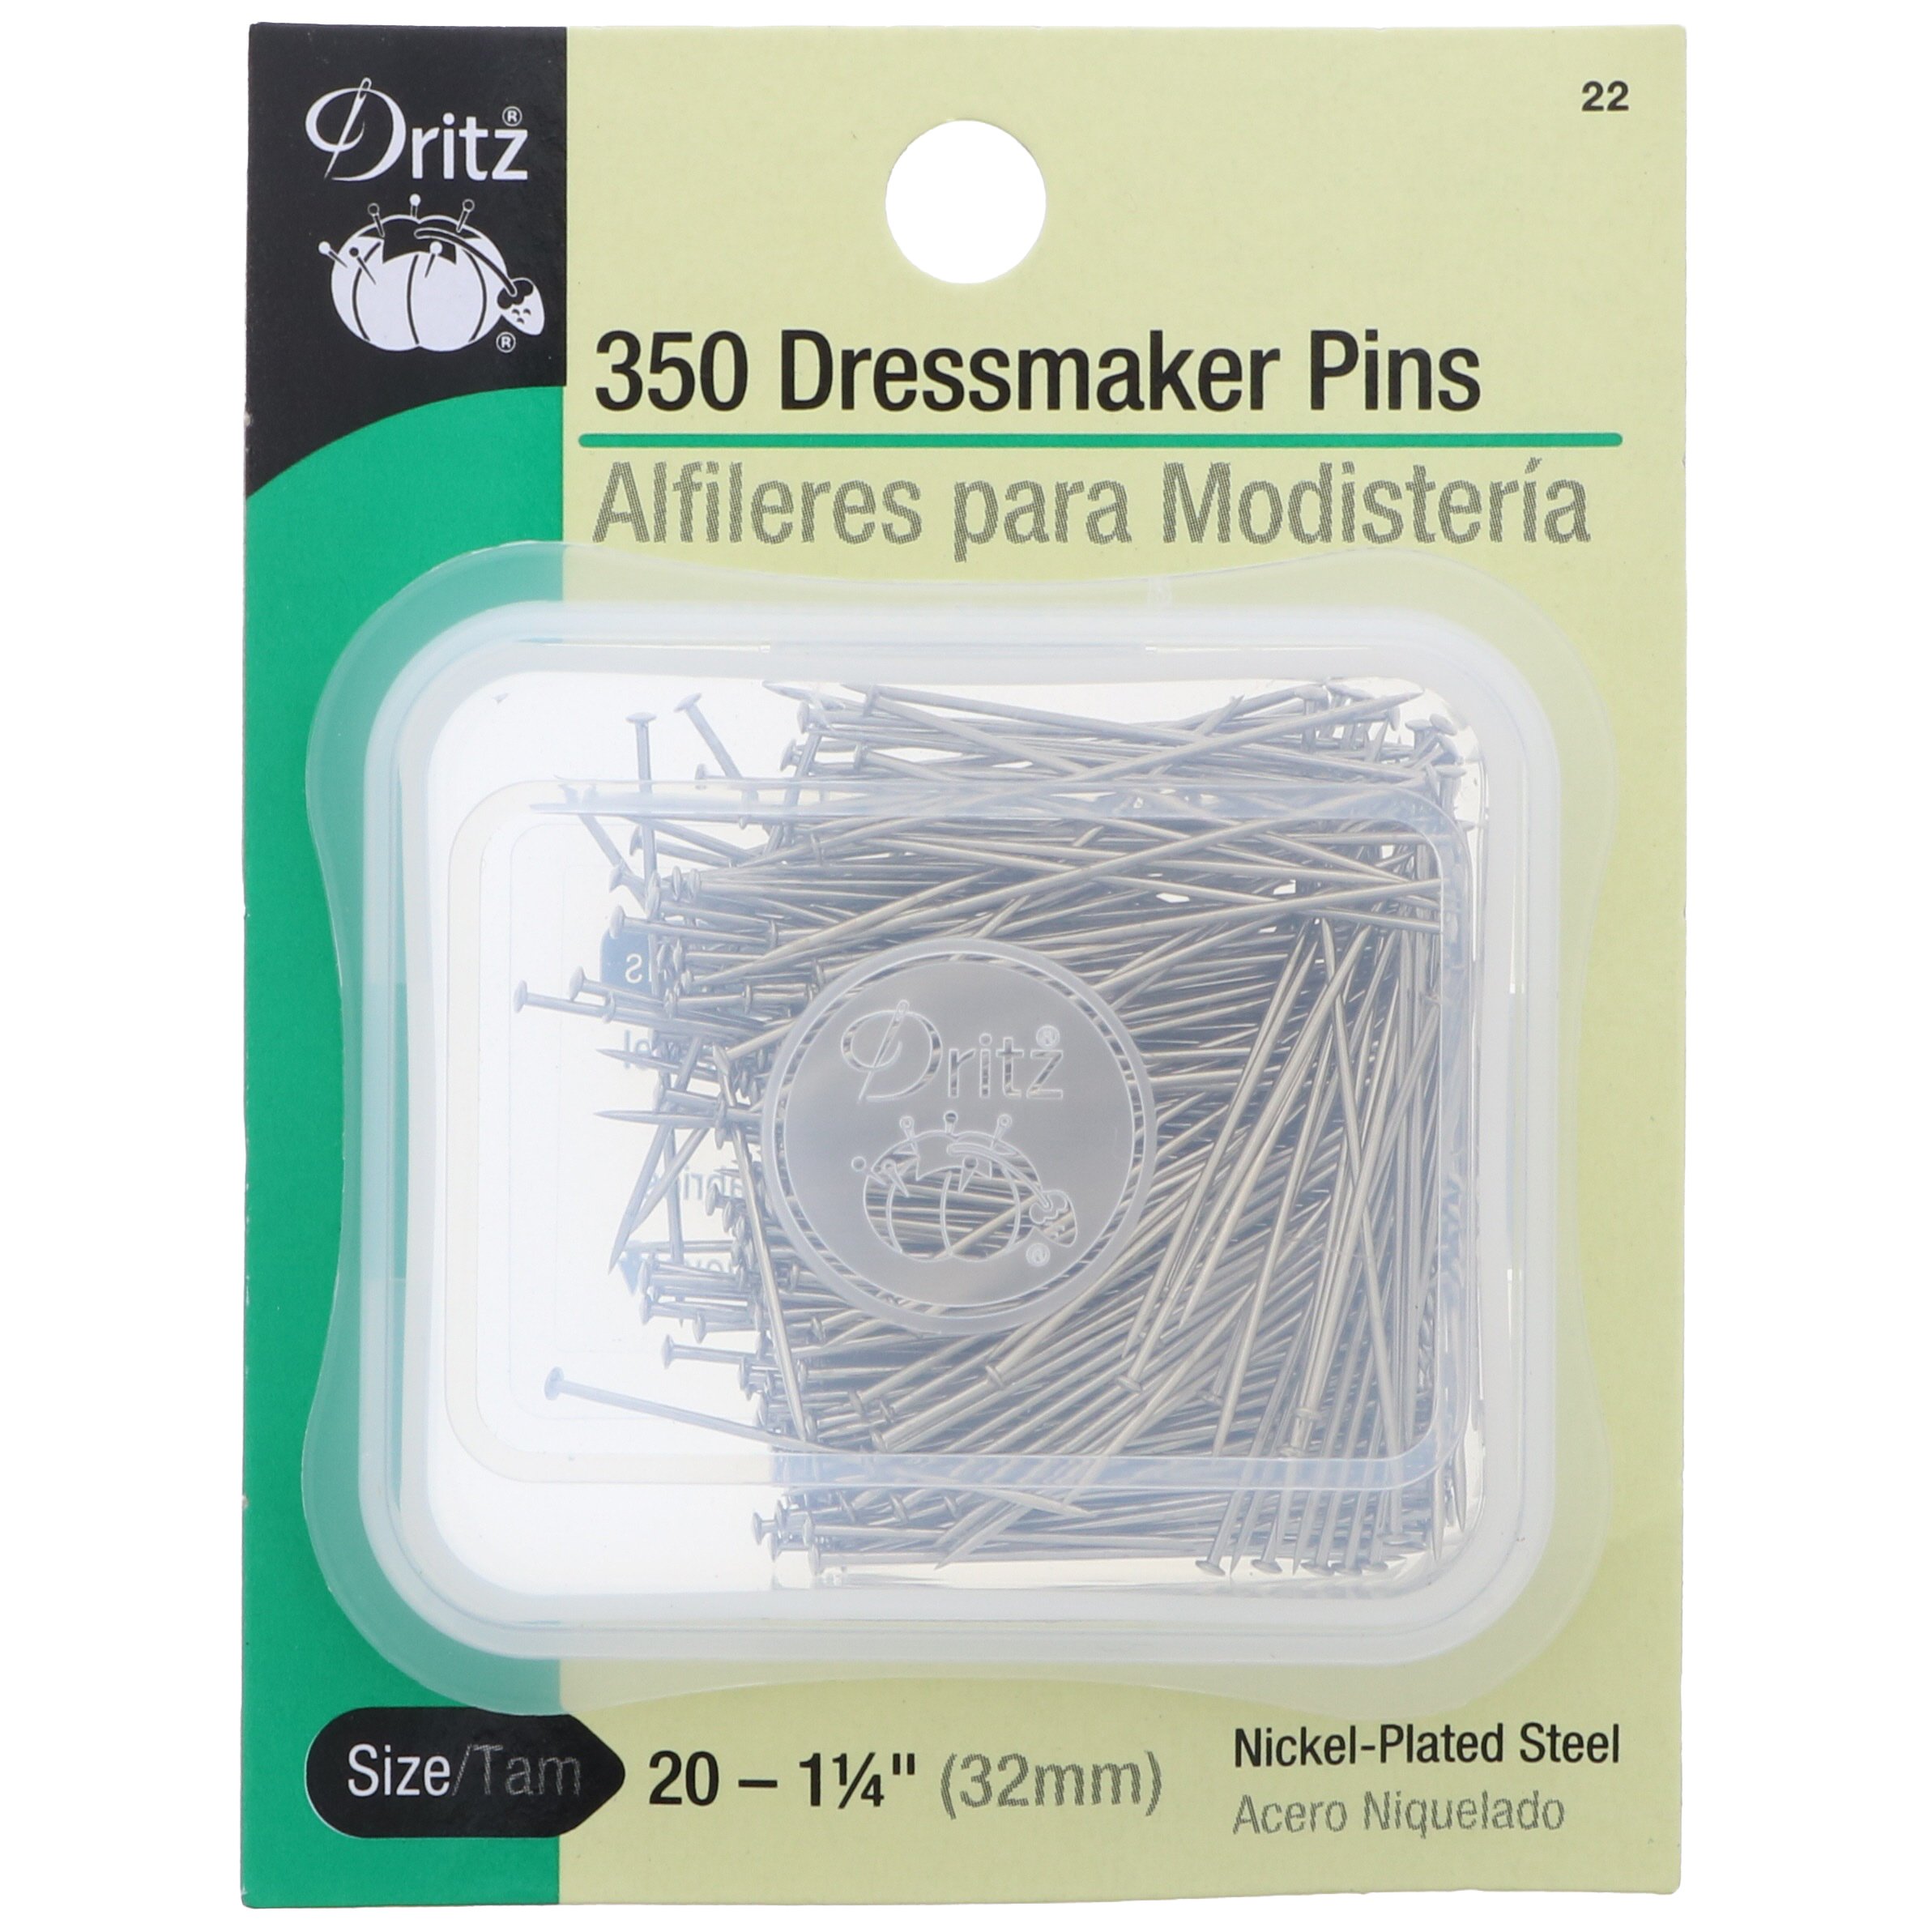 Dritz Dressmaker Pins - Shop Sewing at H-E-B